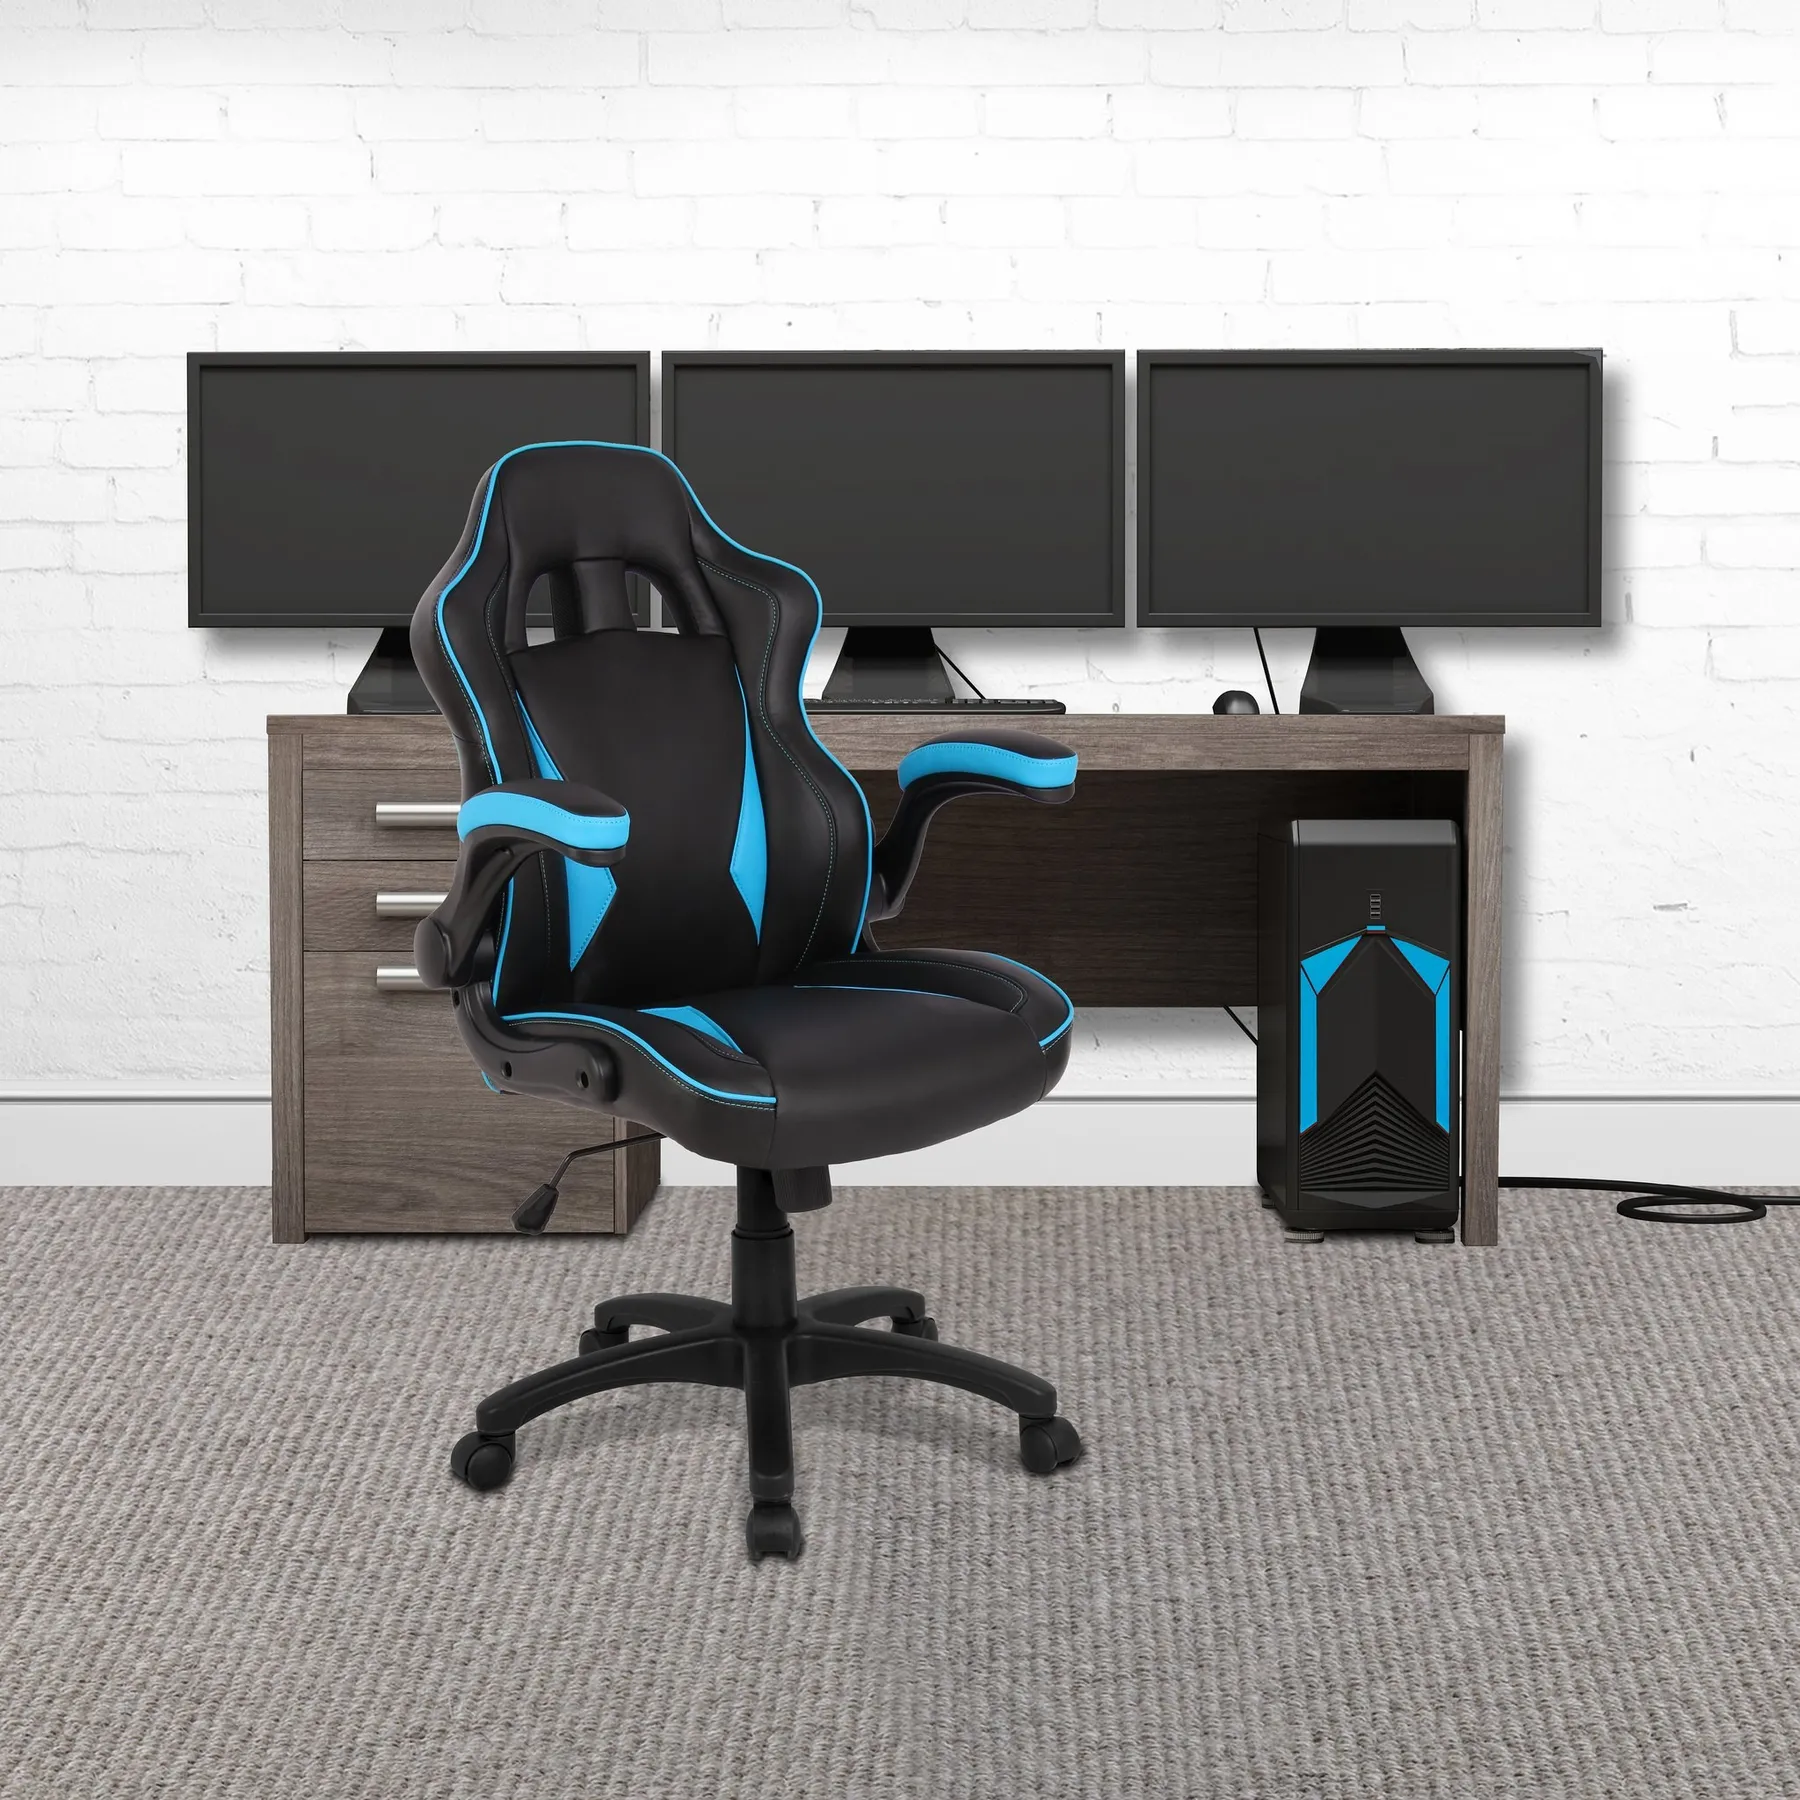 Predator chair blue with desk